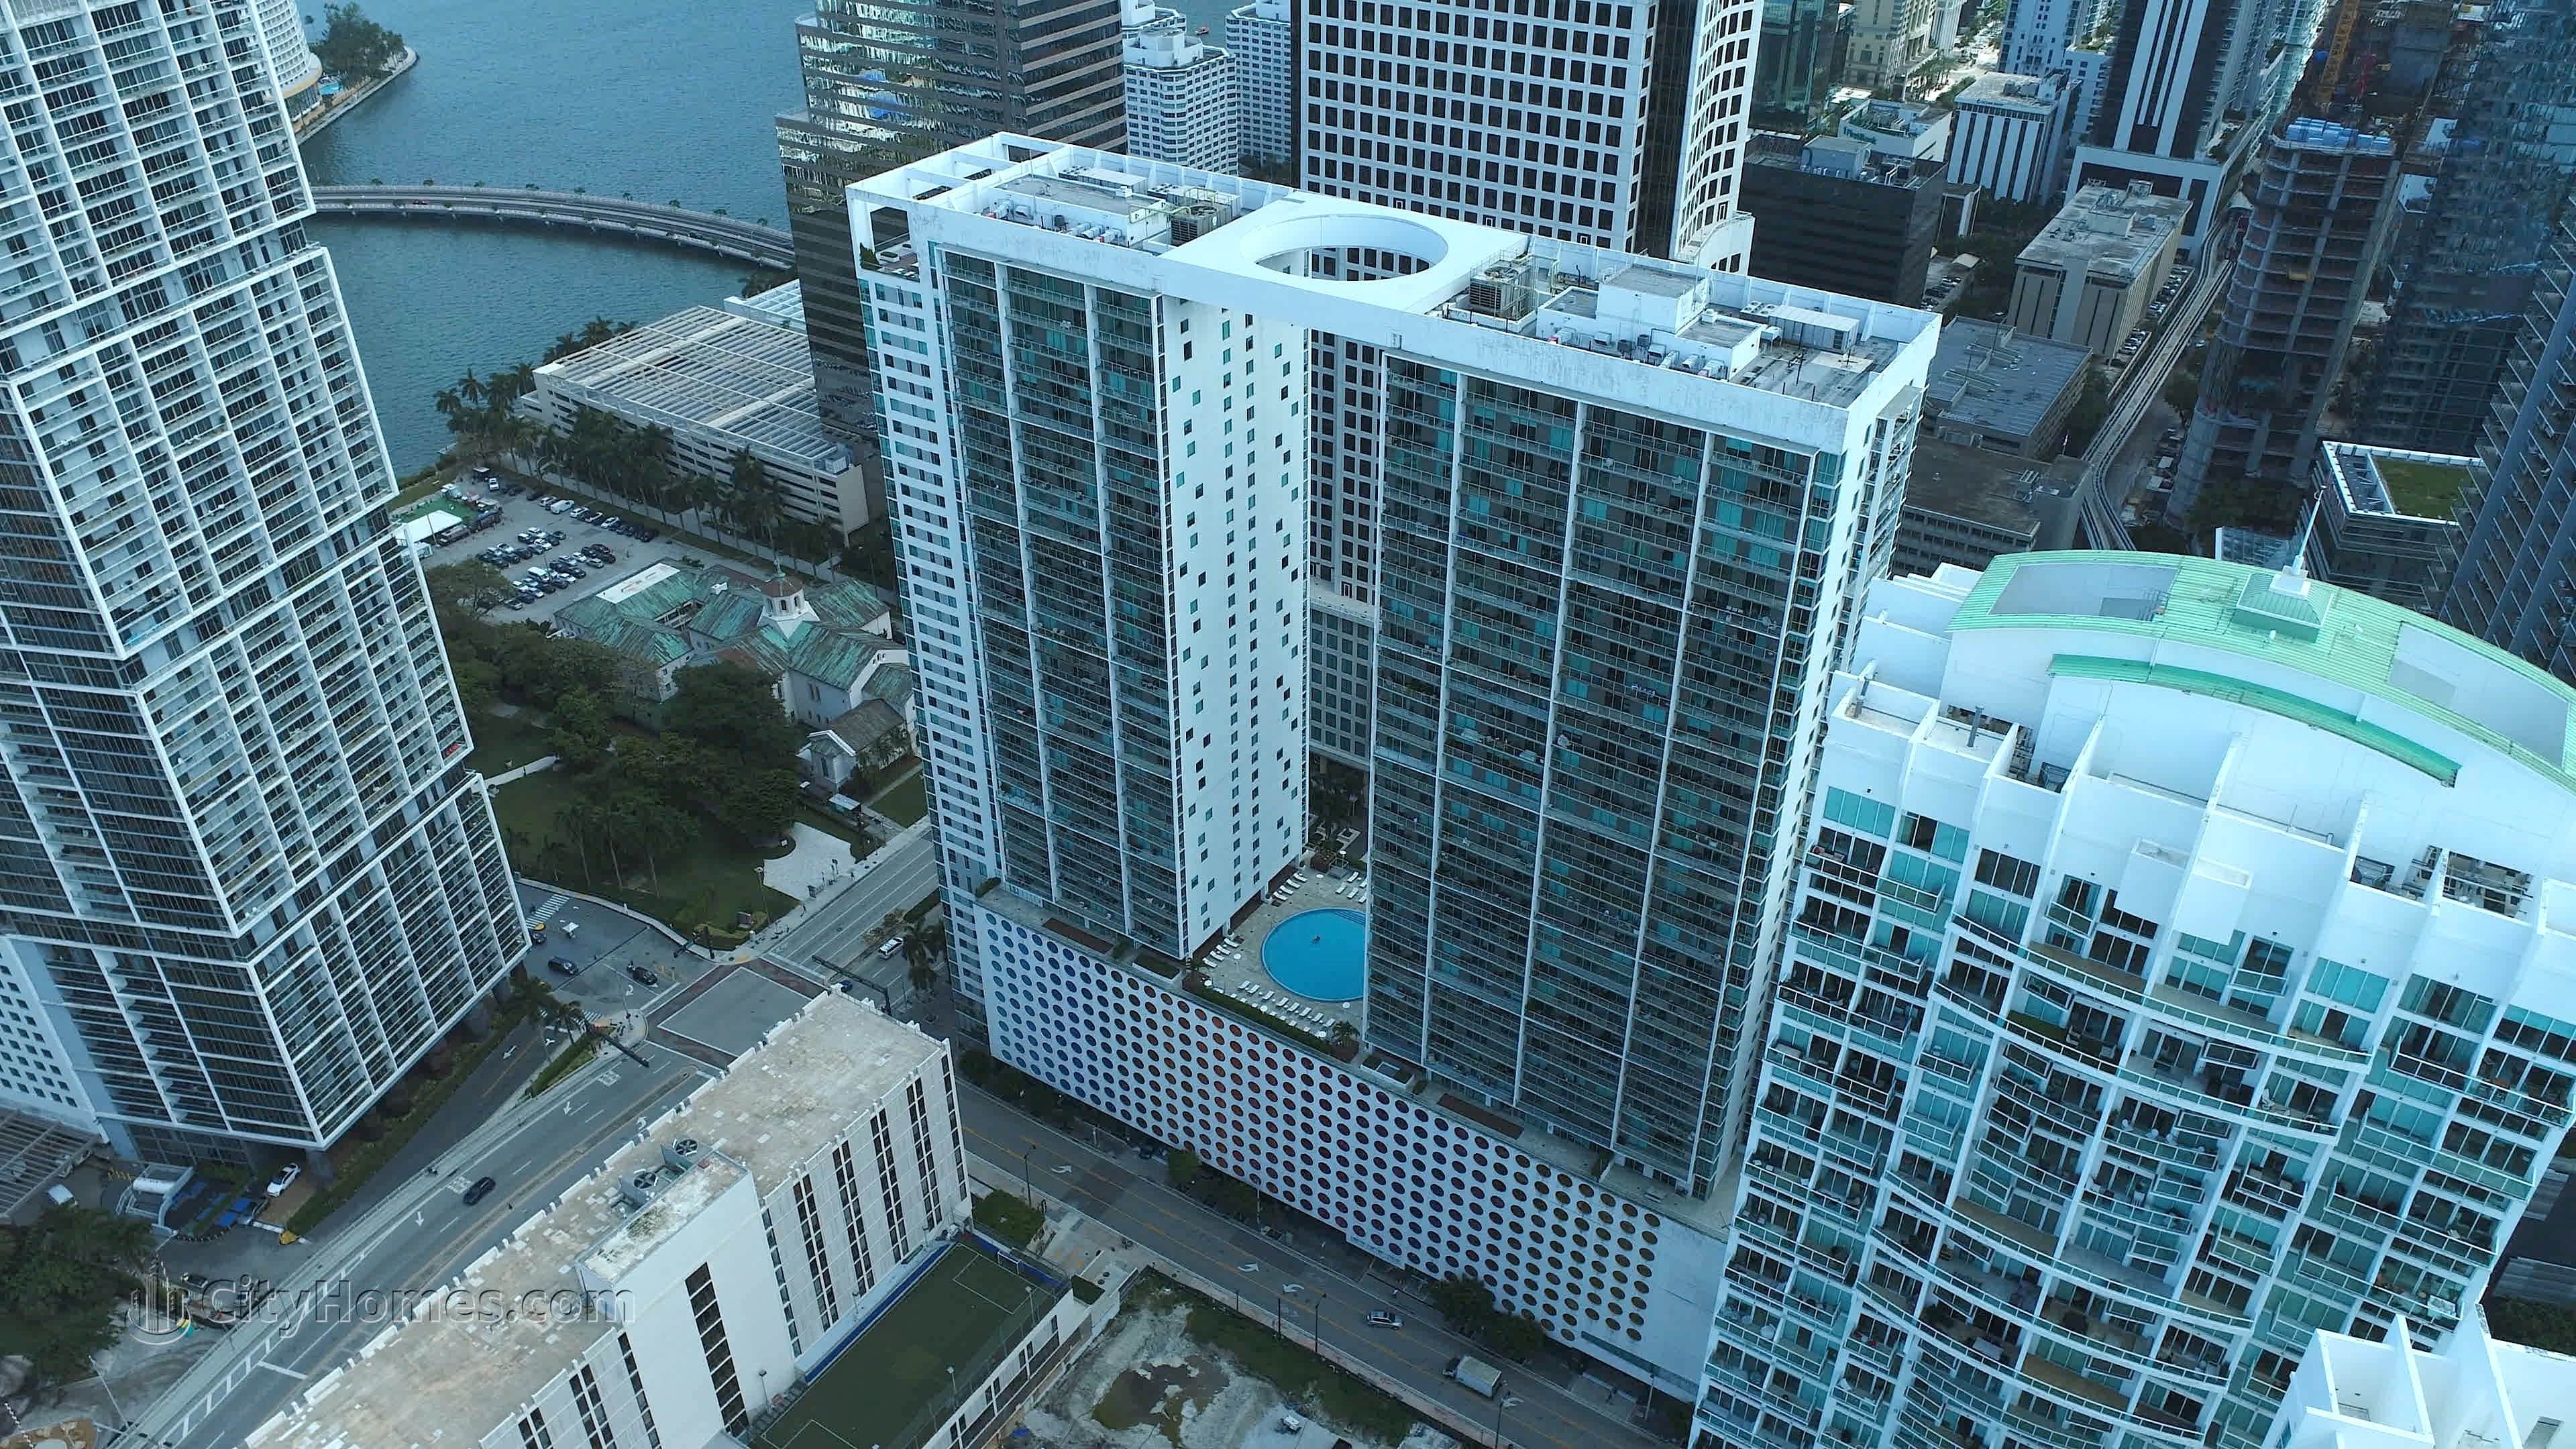 500 Brickell East prédio em 500 Brickell Avenue, Miami, FL 33131